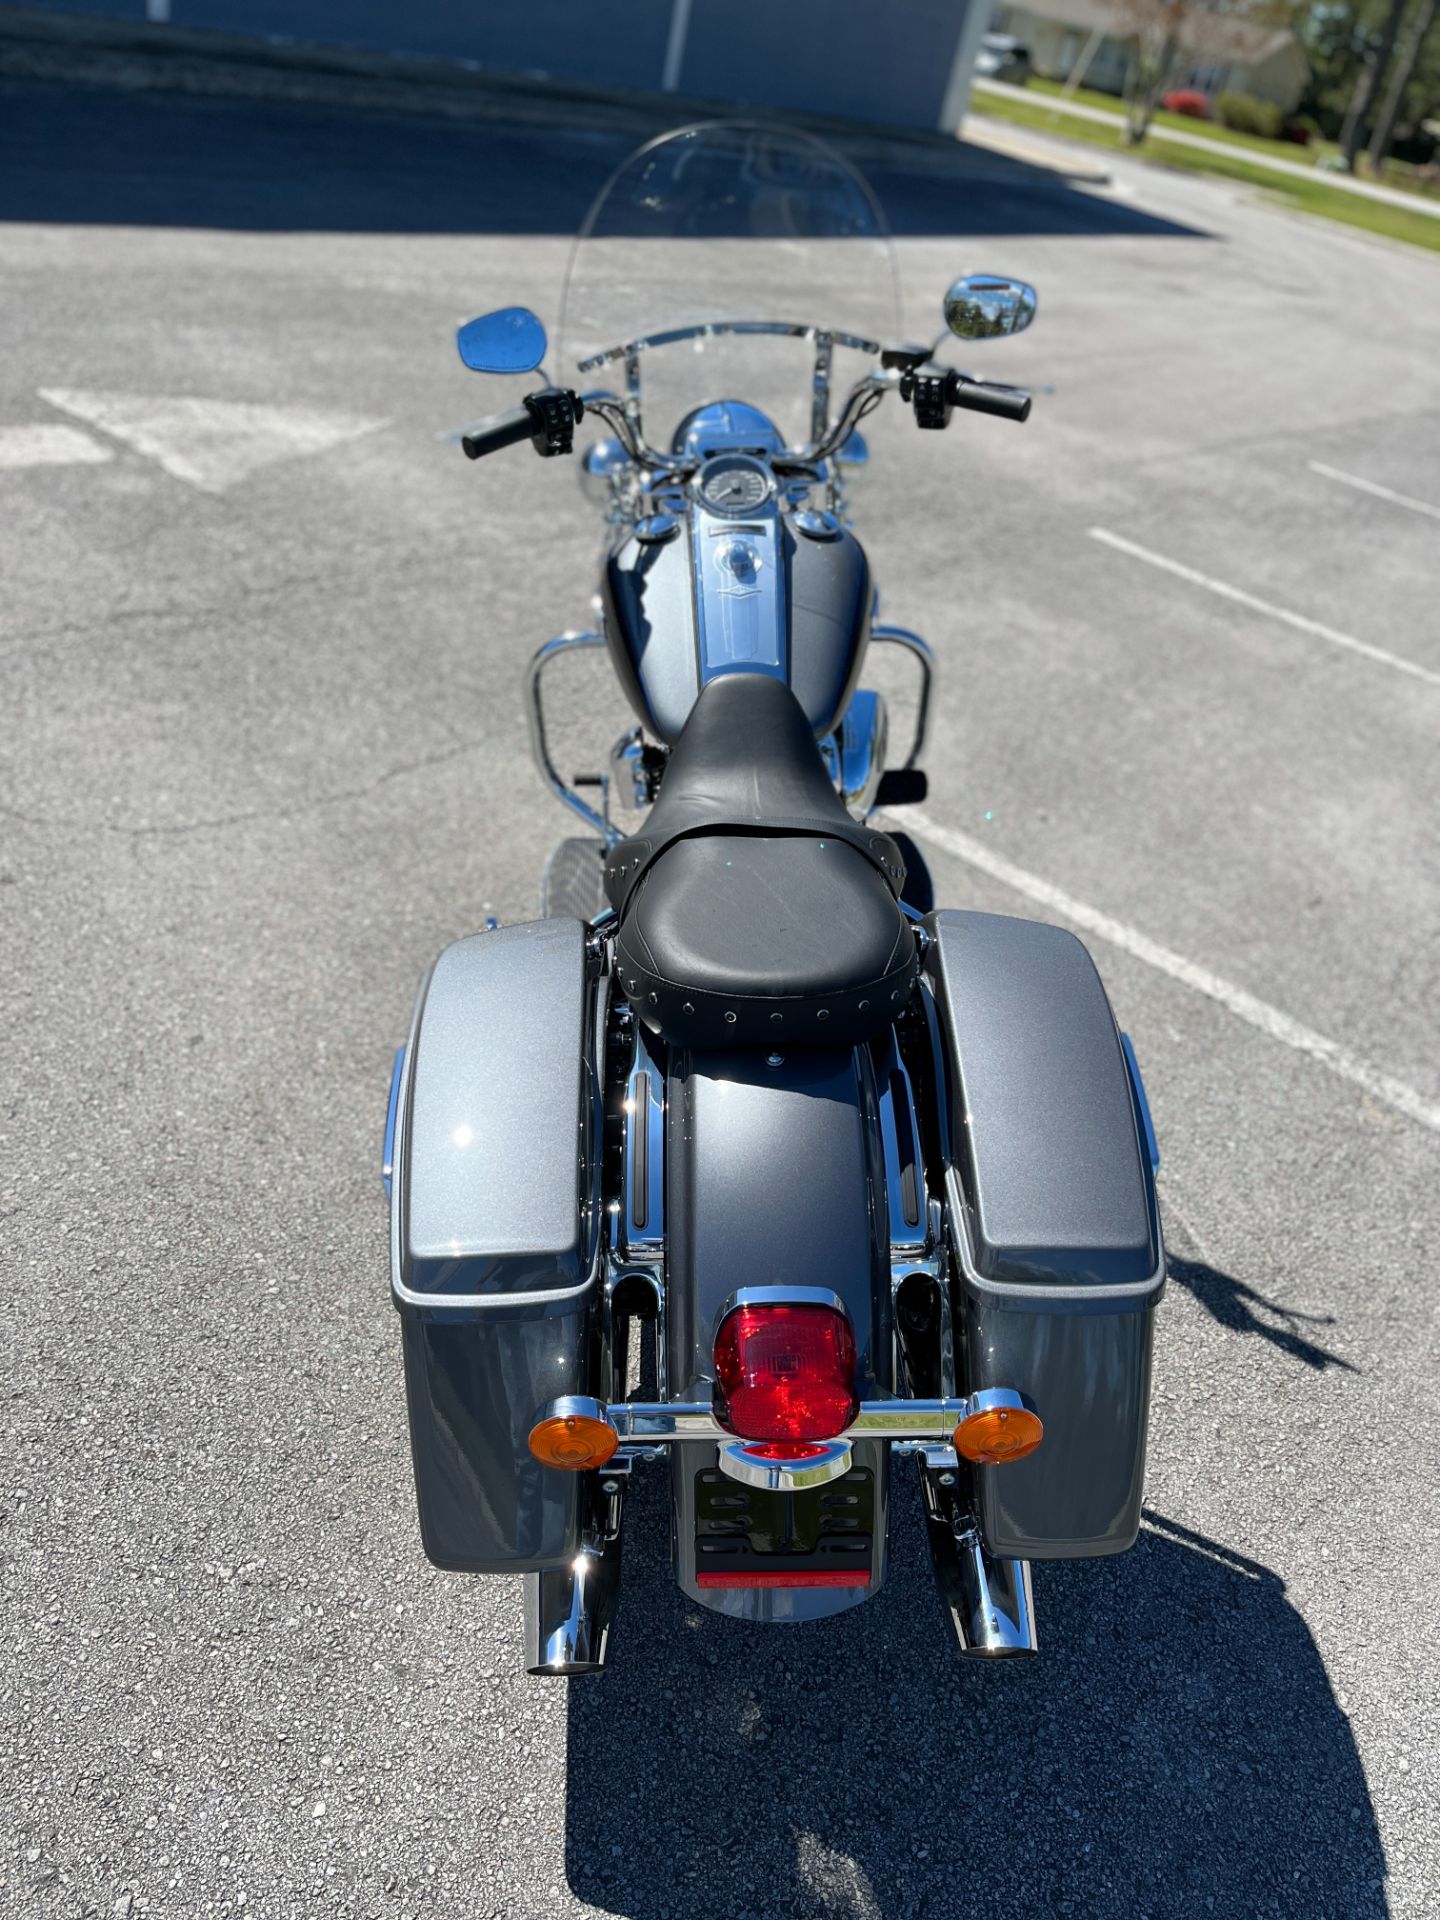 2022 Harley-Davidson Road King® in Jacksonville, North Carolina - Photo 6